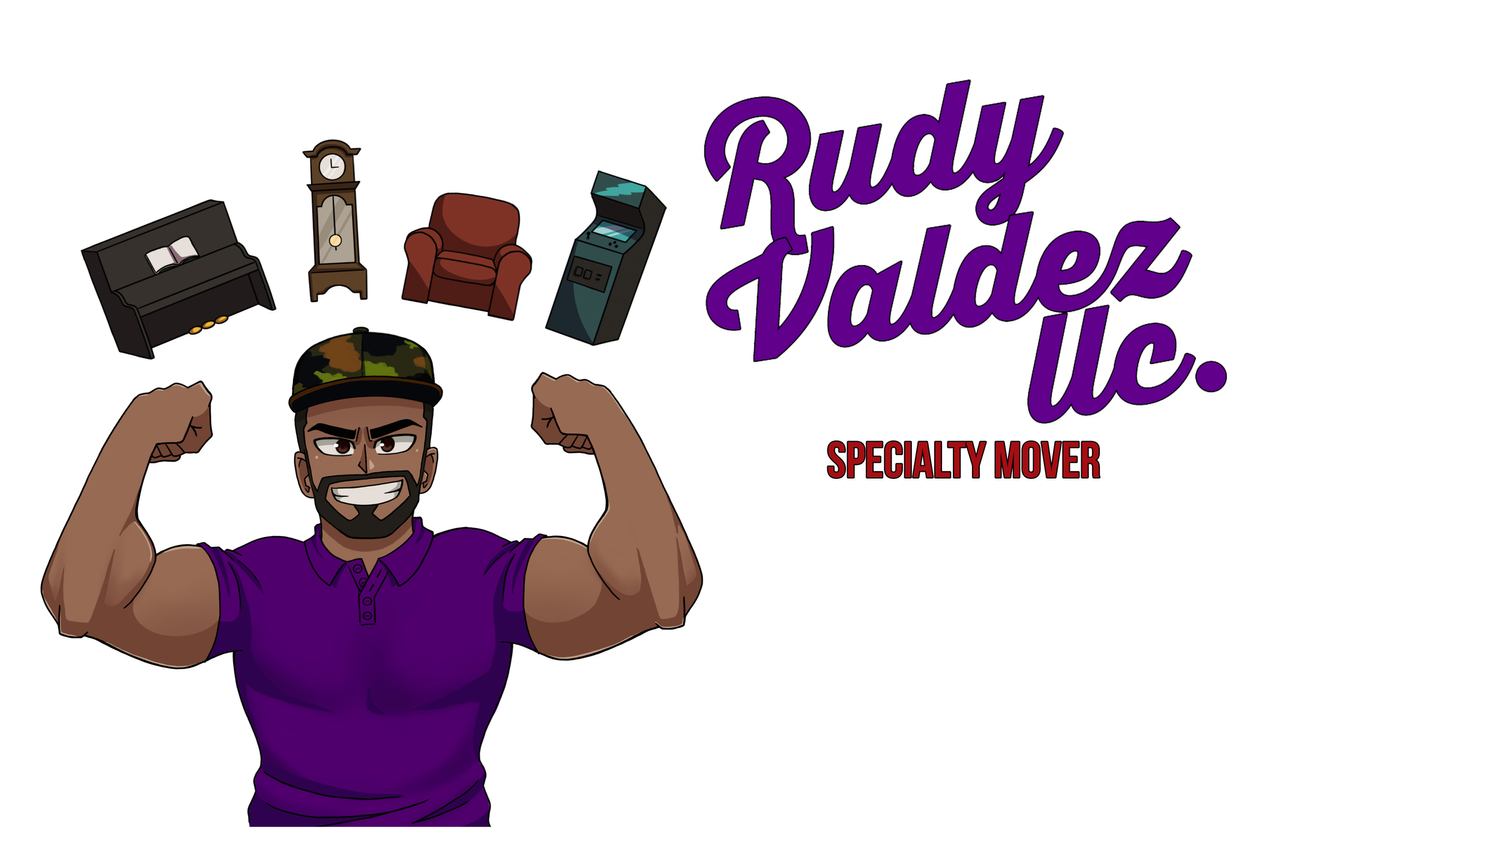 Rudy Valdez, LLC.